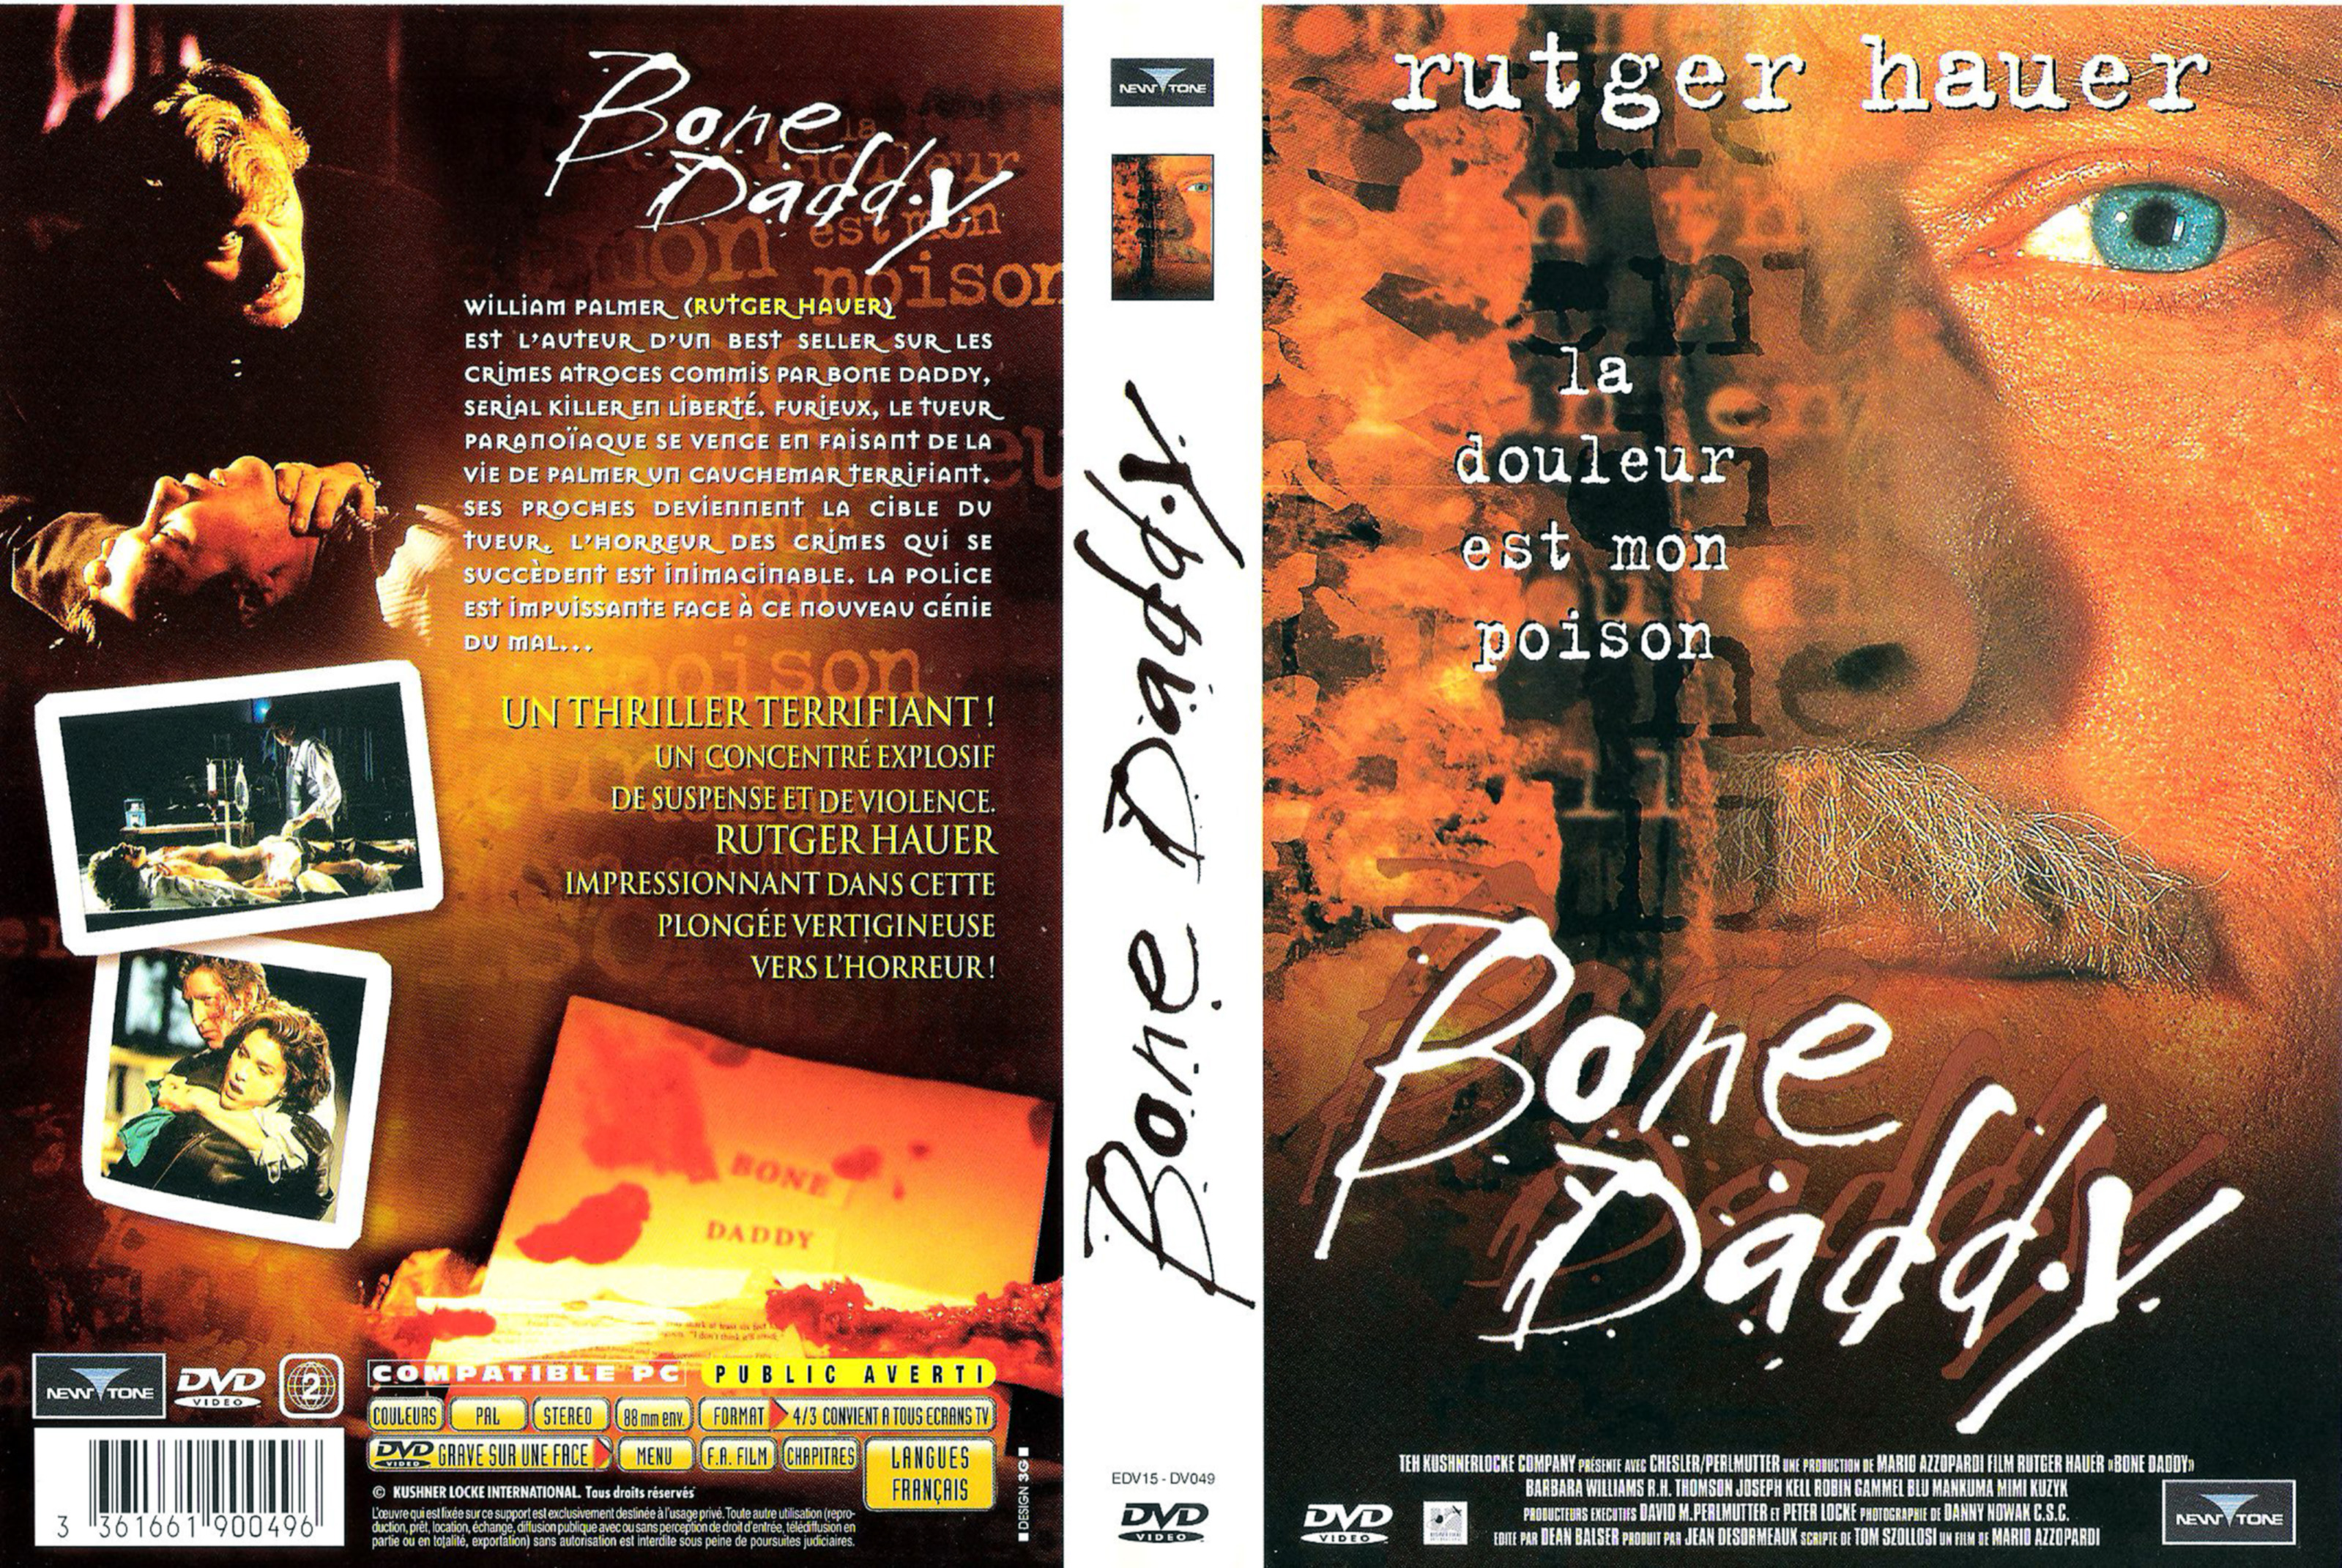 Jaquette DVD Bone daddy v2